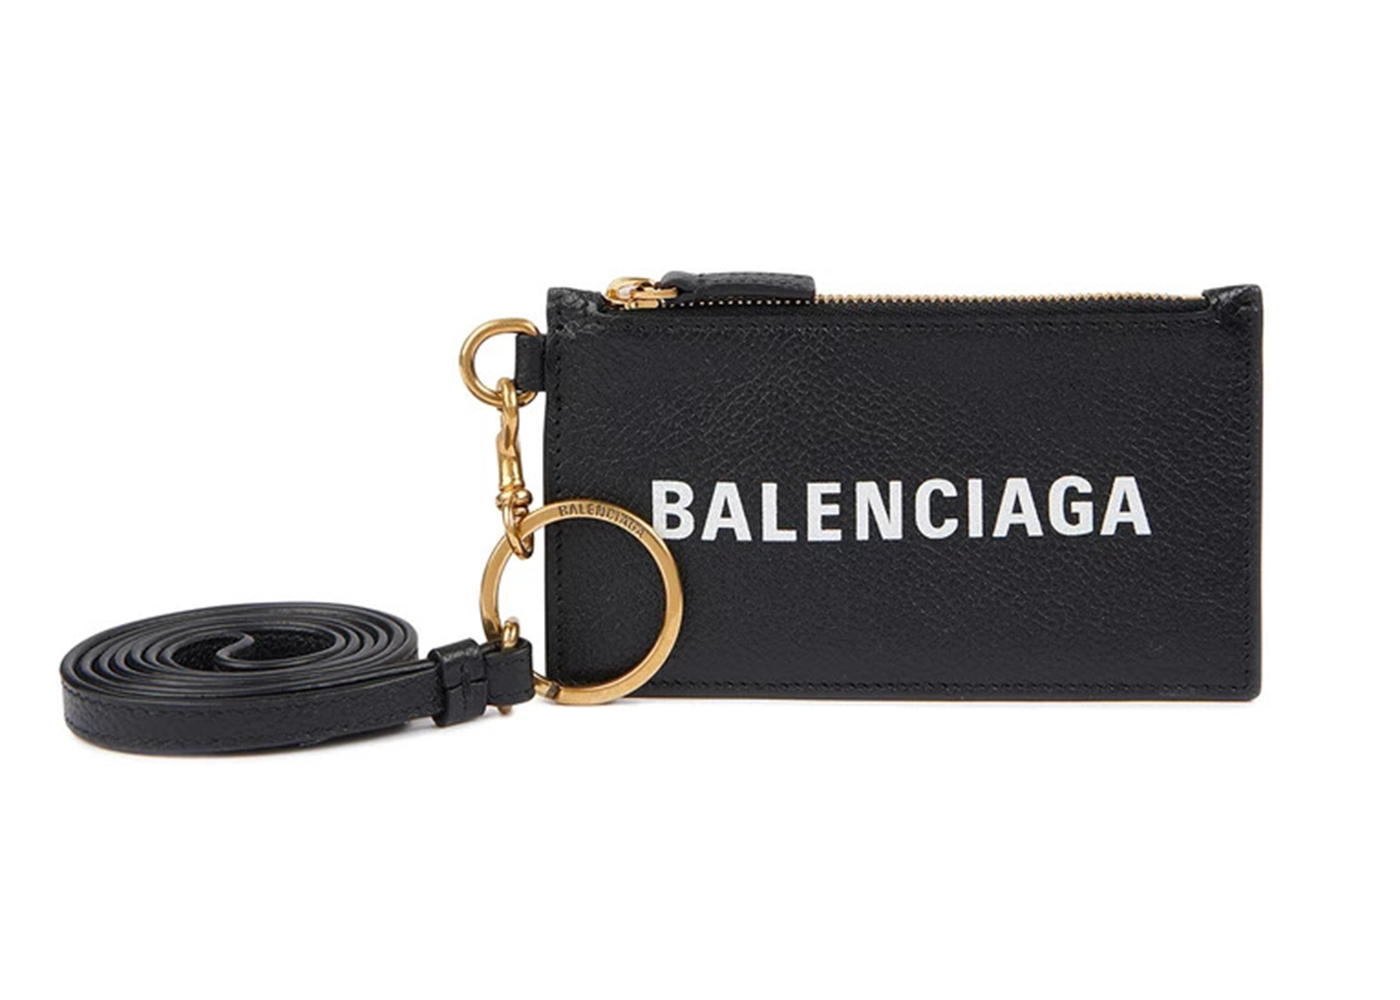 Balenciaga On Keyring Cash Card Case Black